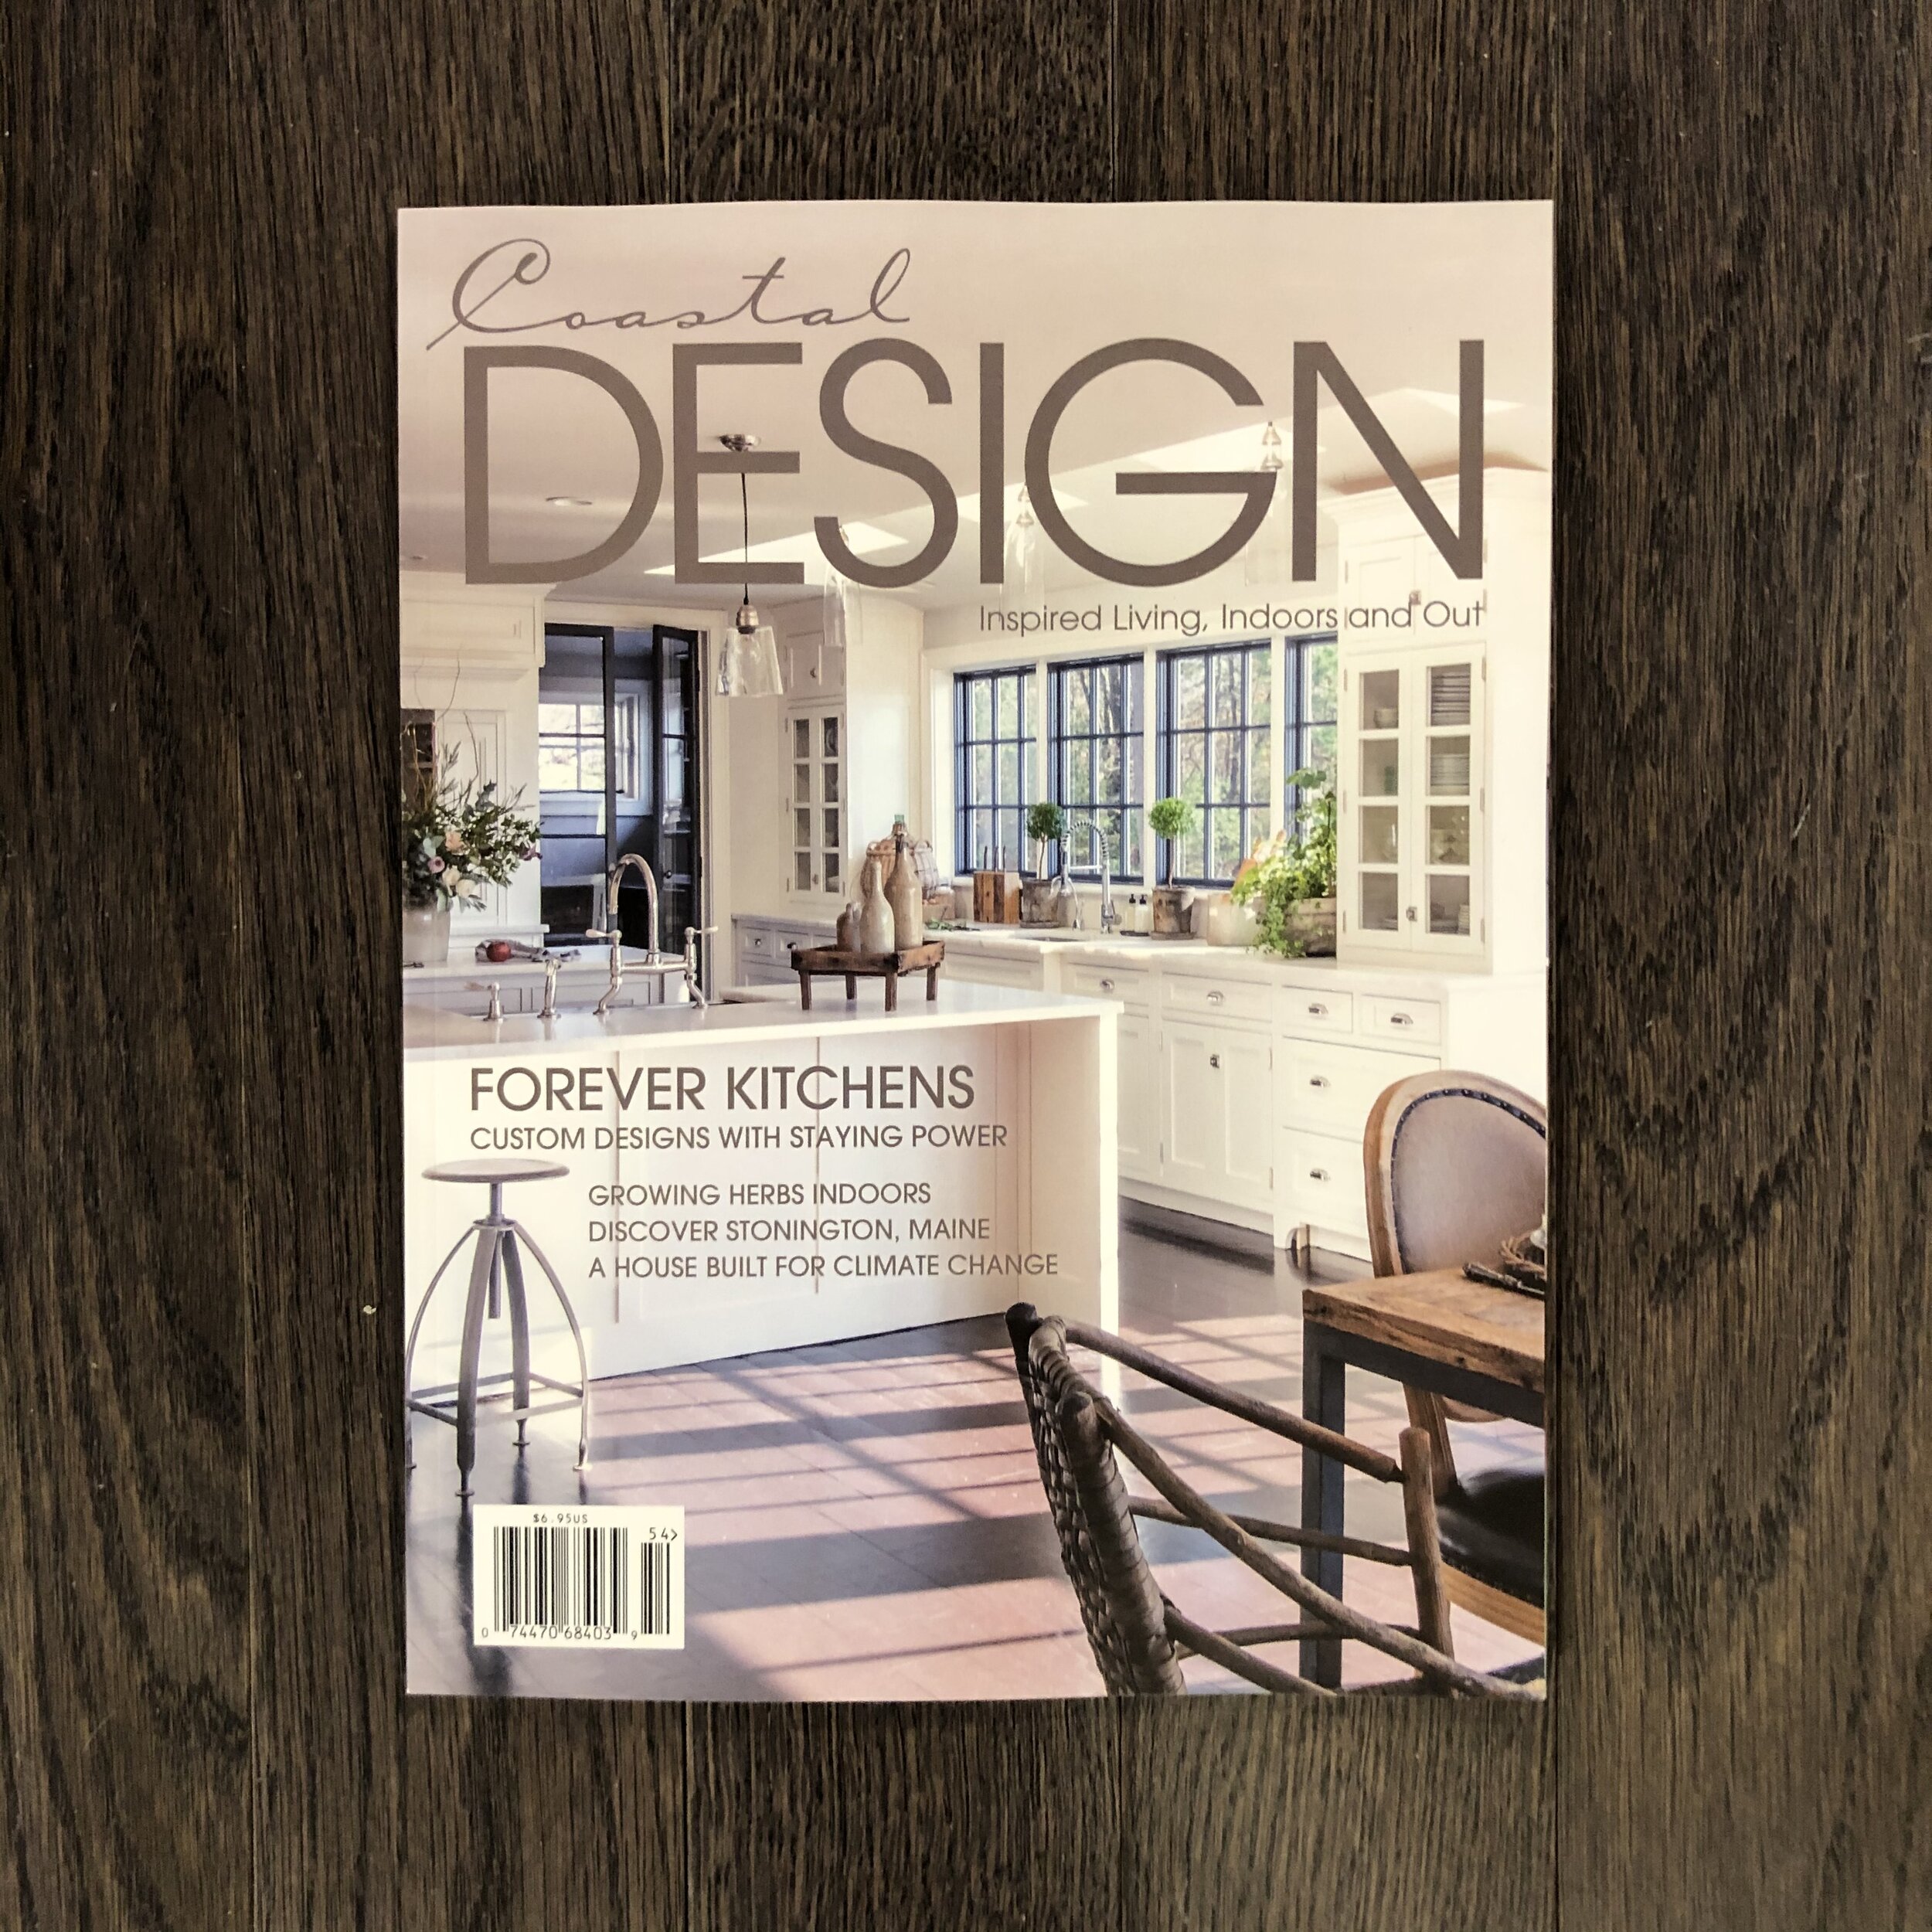 Coastal Design Magazine January 2020 Cover.jpg